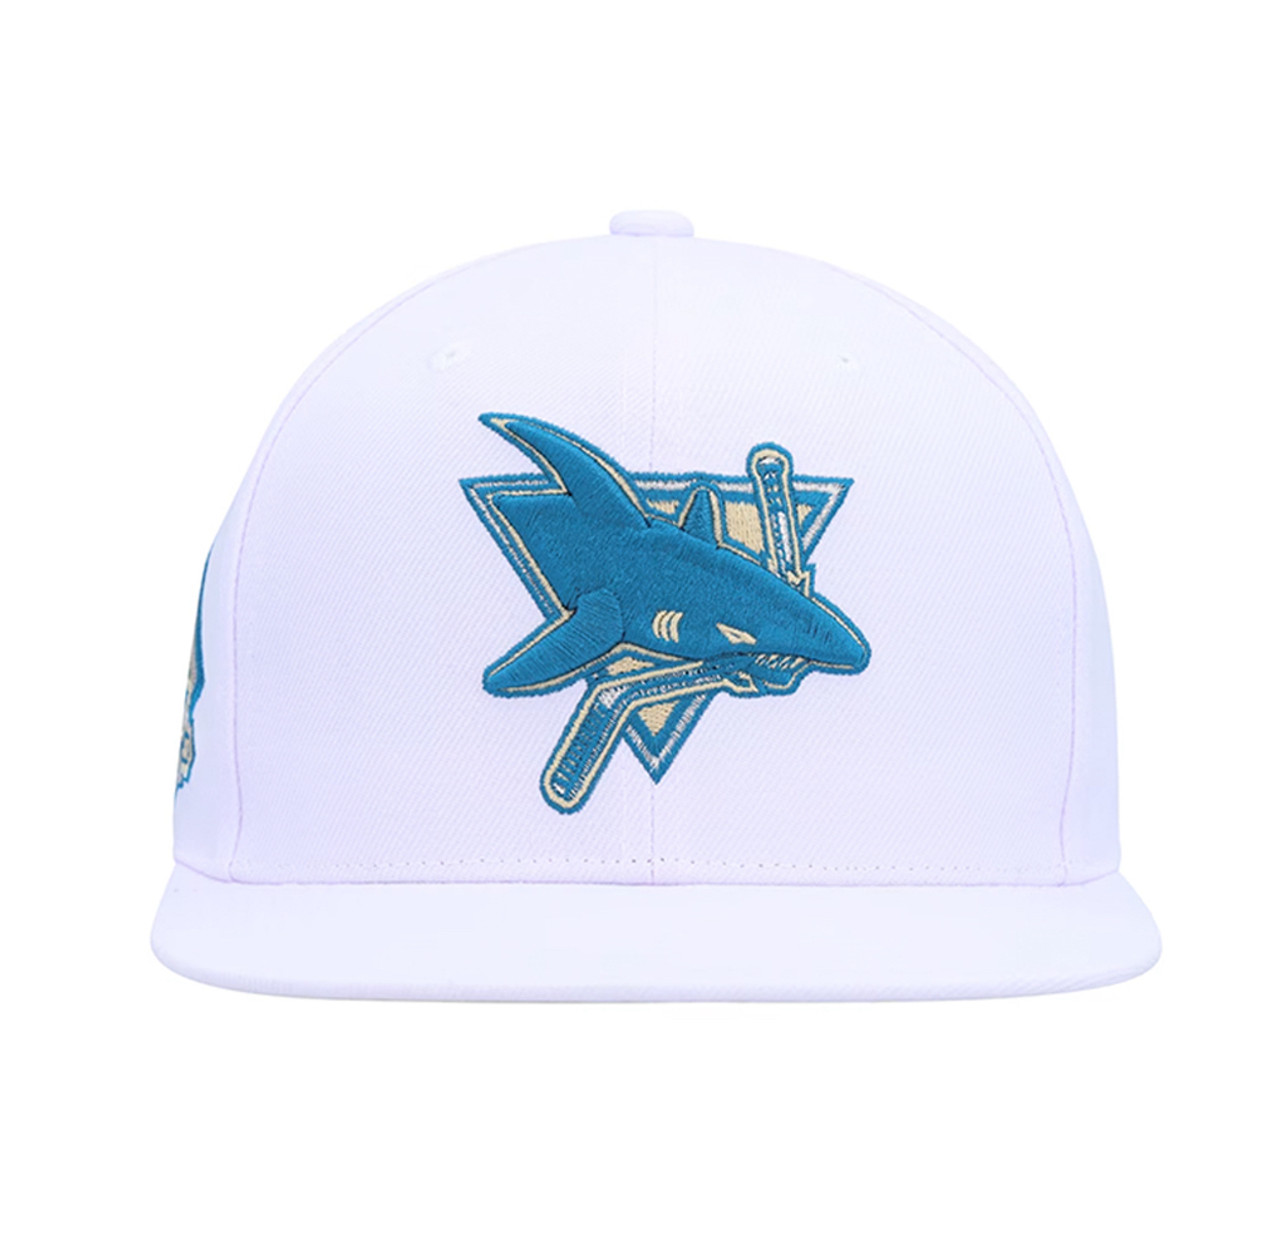  San Jose Sharks Embroidered Team Logo Collectible